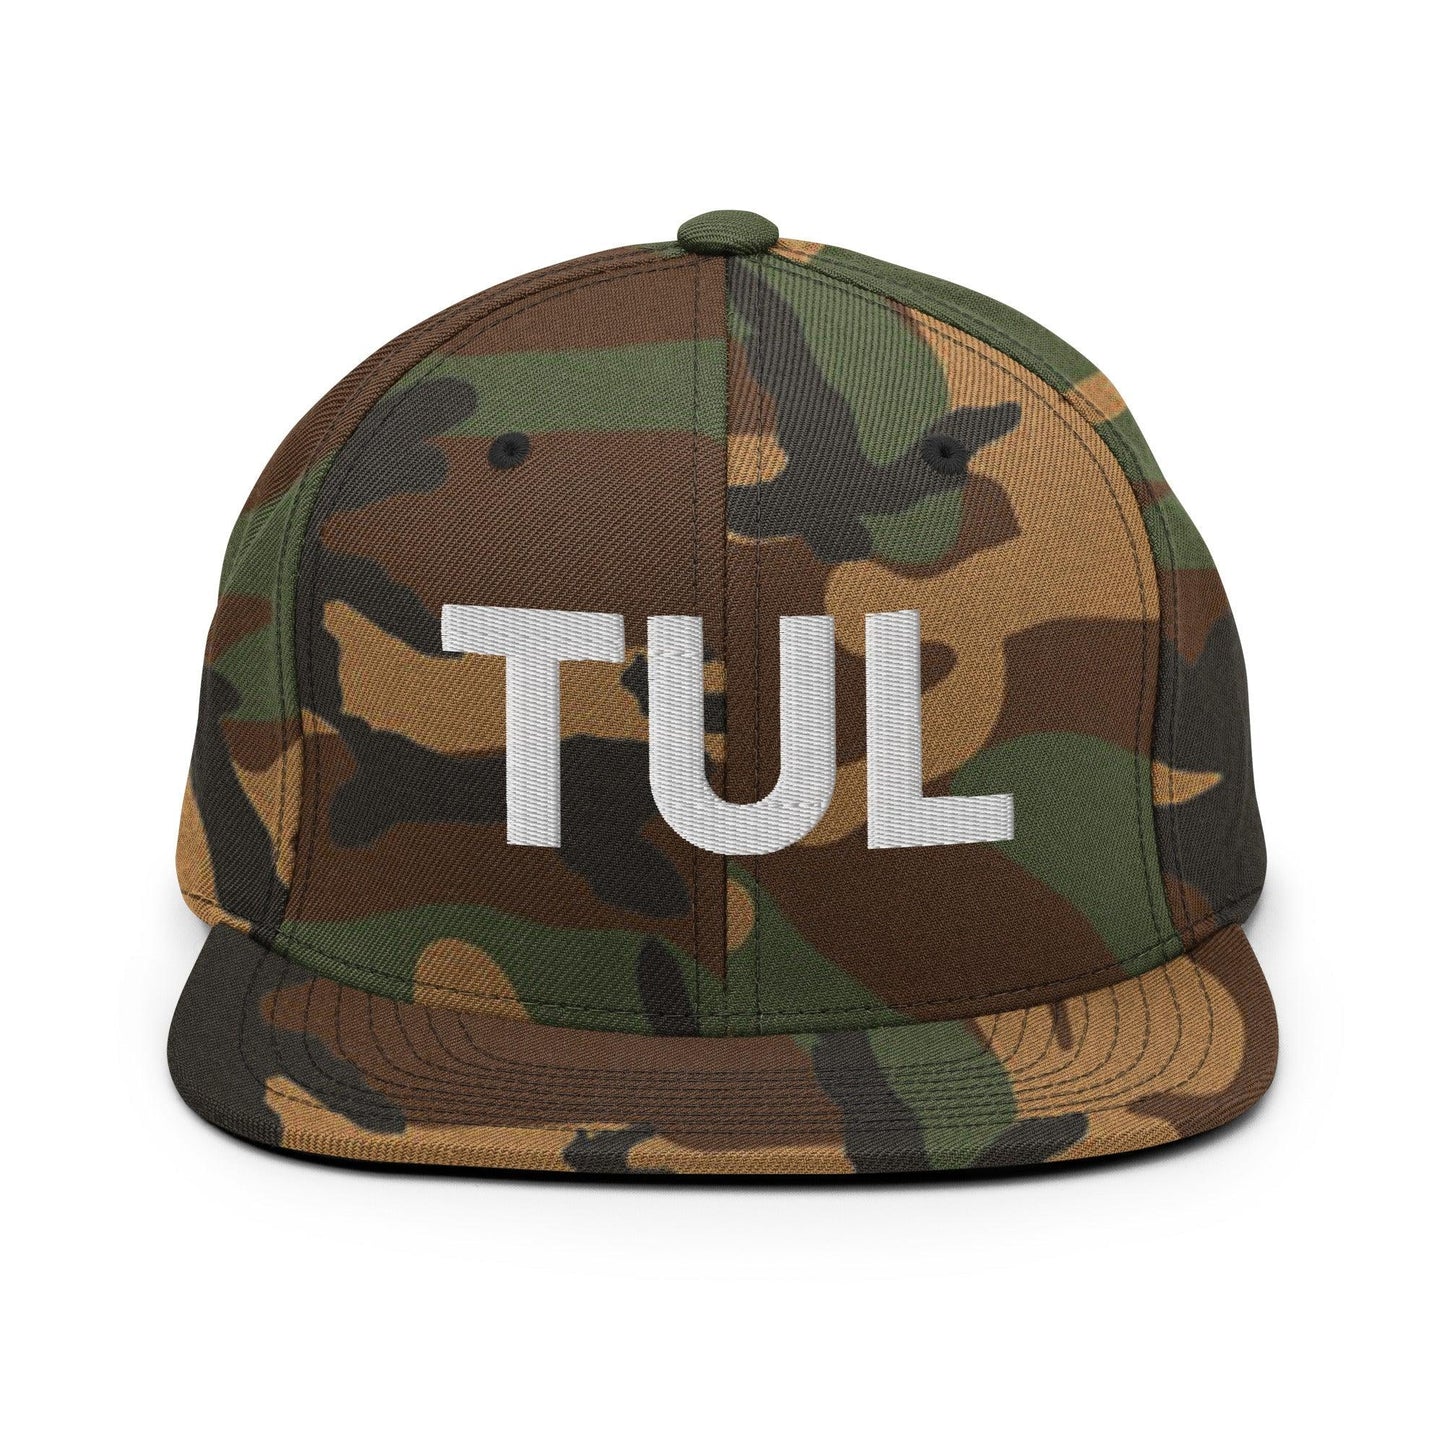 Tulsa TUL Vintage Block Snapback Hat Green Camo